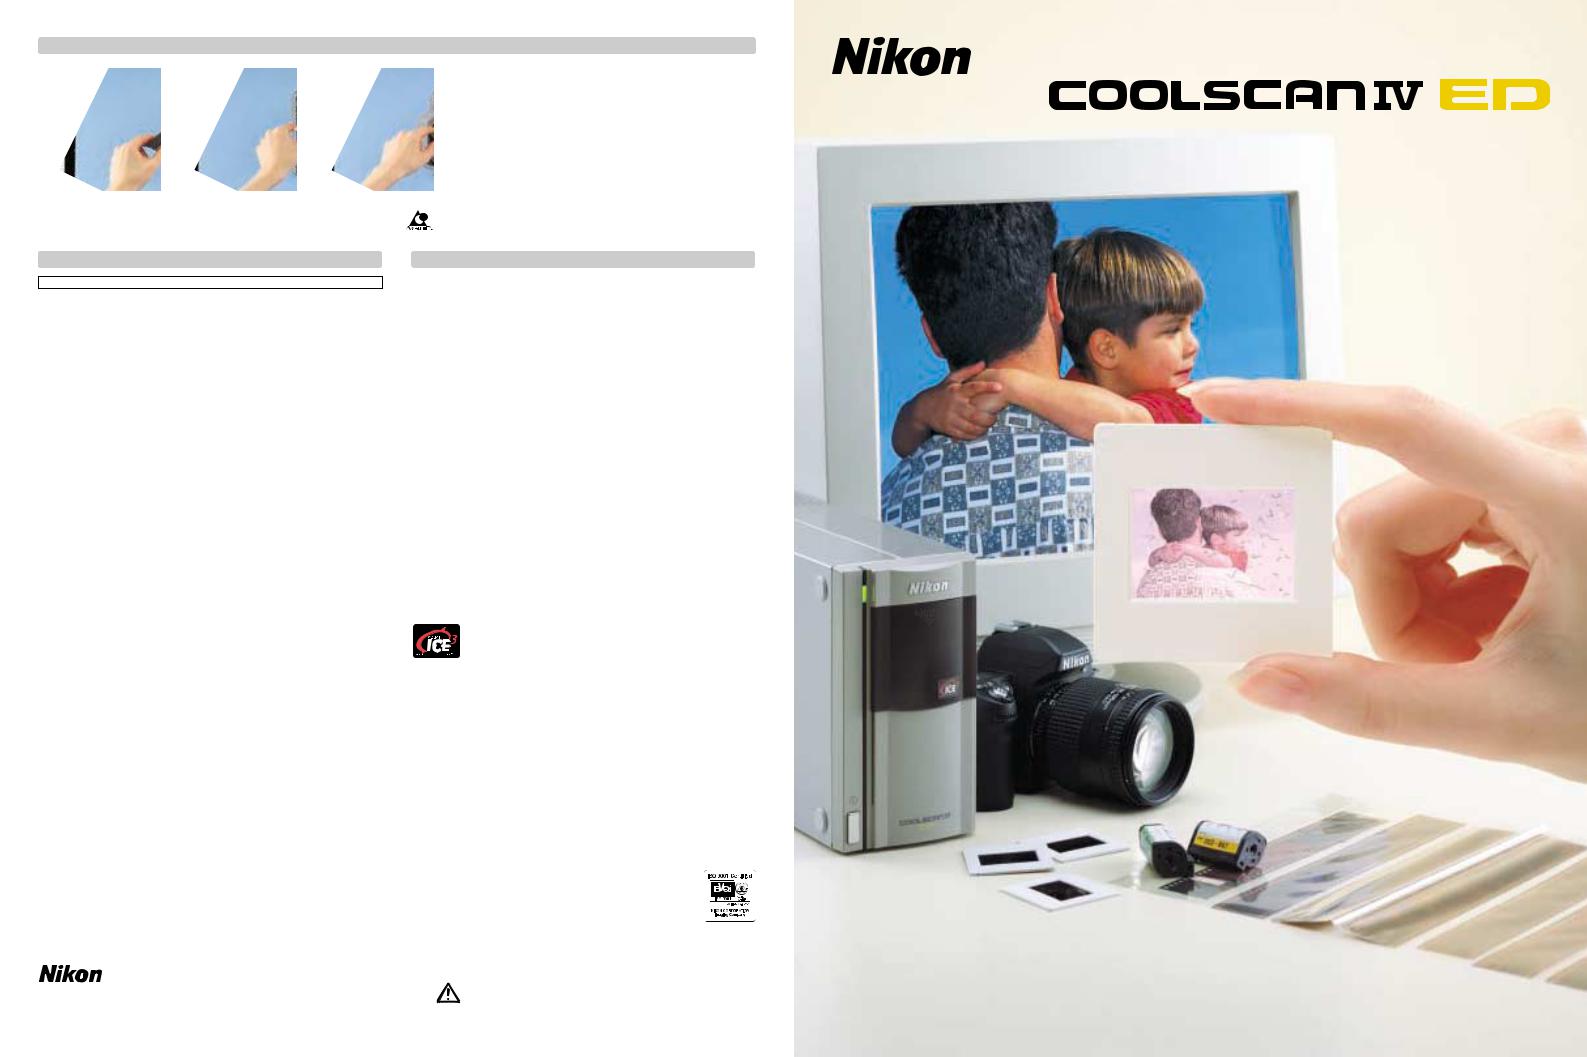 Nikon COOLSCAN IV BROCHURE